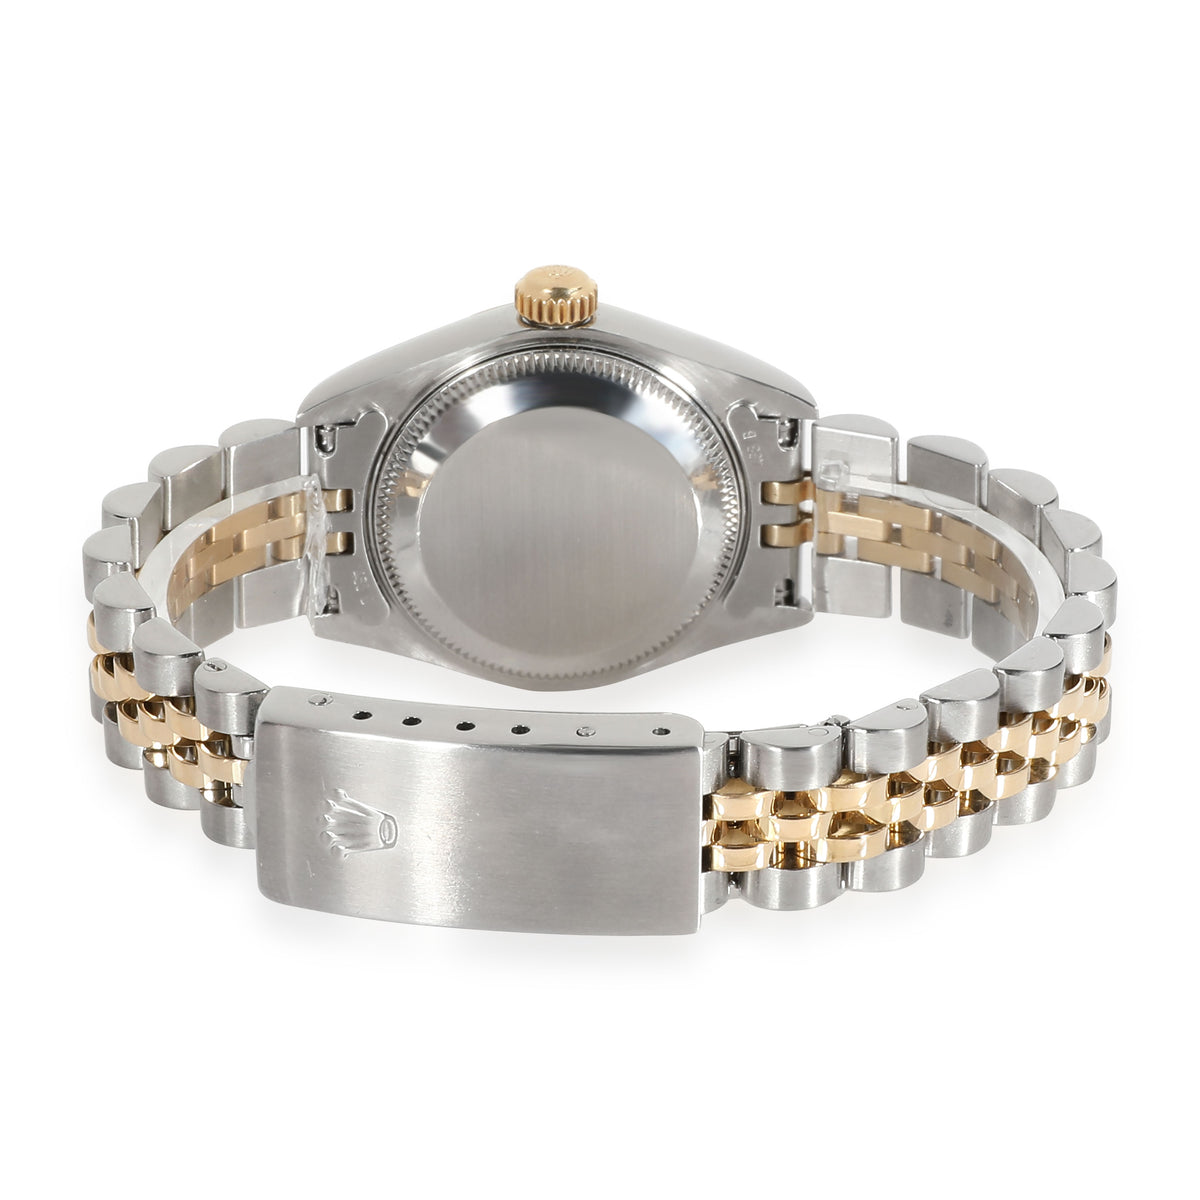 Rolex Datejust 69173 Women's Watch in 18kt Stainless Steel/Yellow Gold